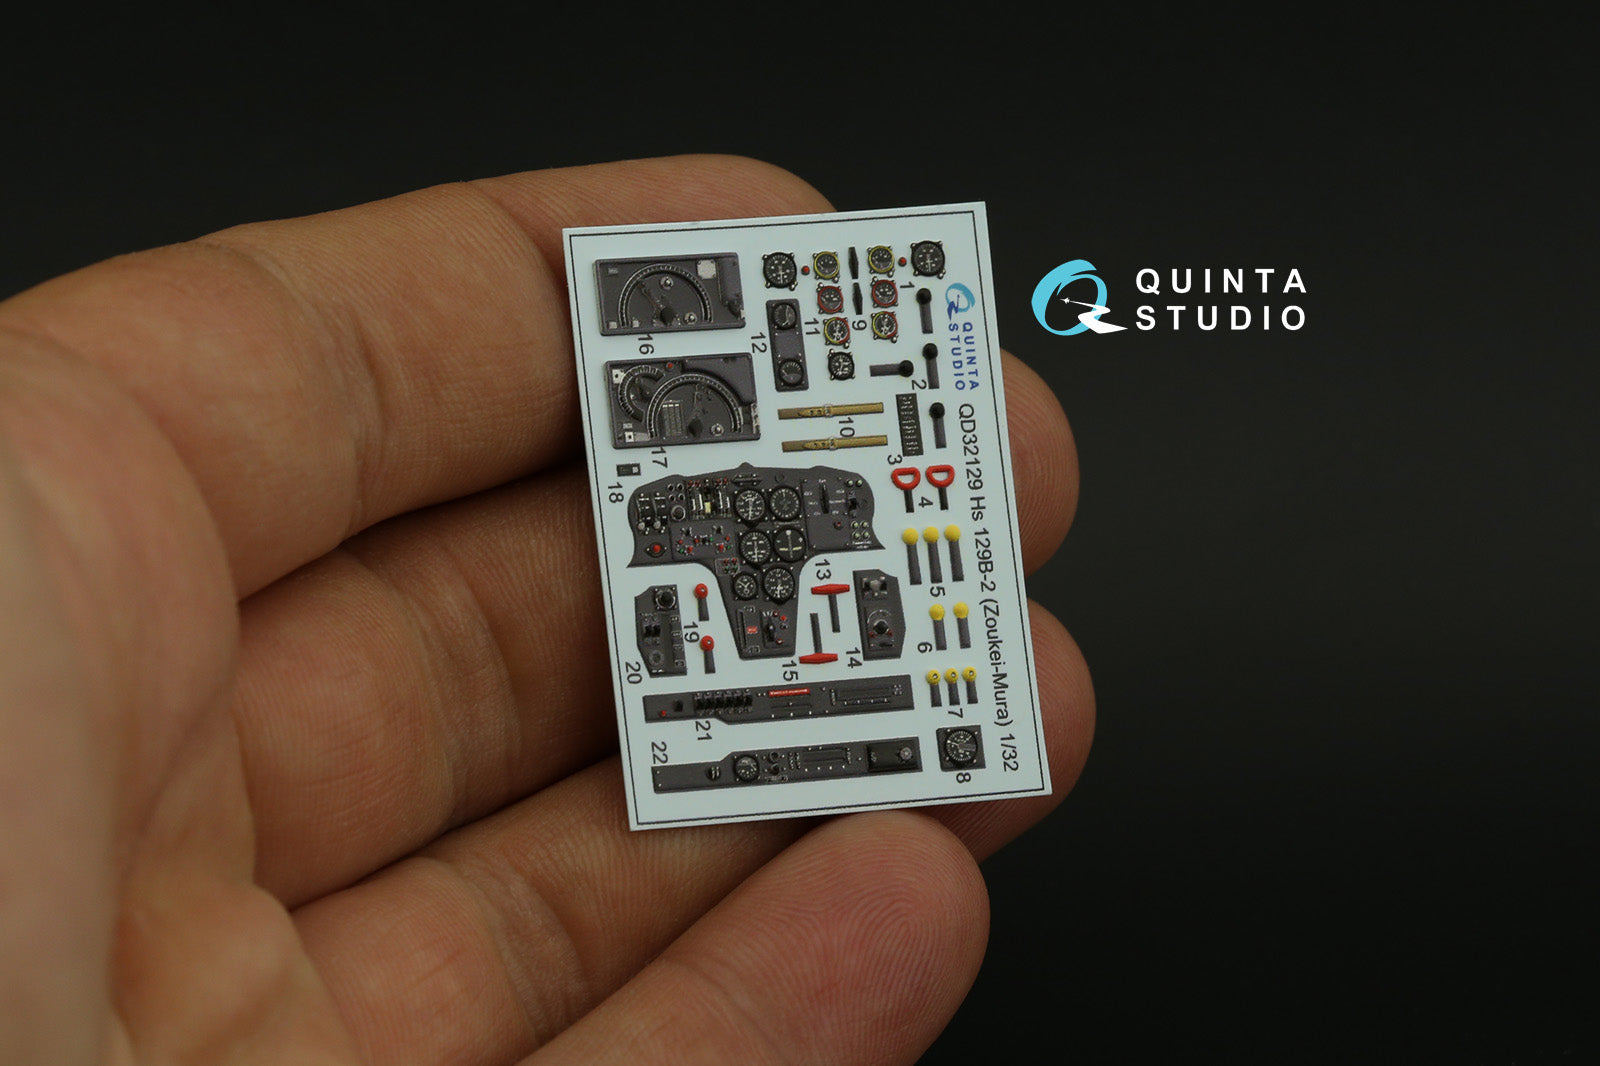 Quinta Studio - 1/32 Hs 129B-2 QD32129 for Zoukei-Mura kit